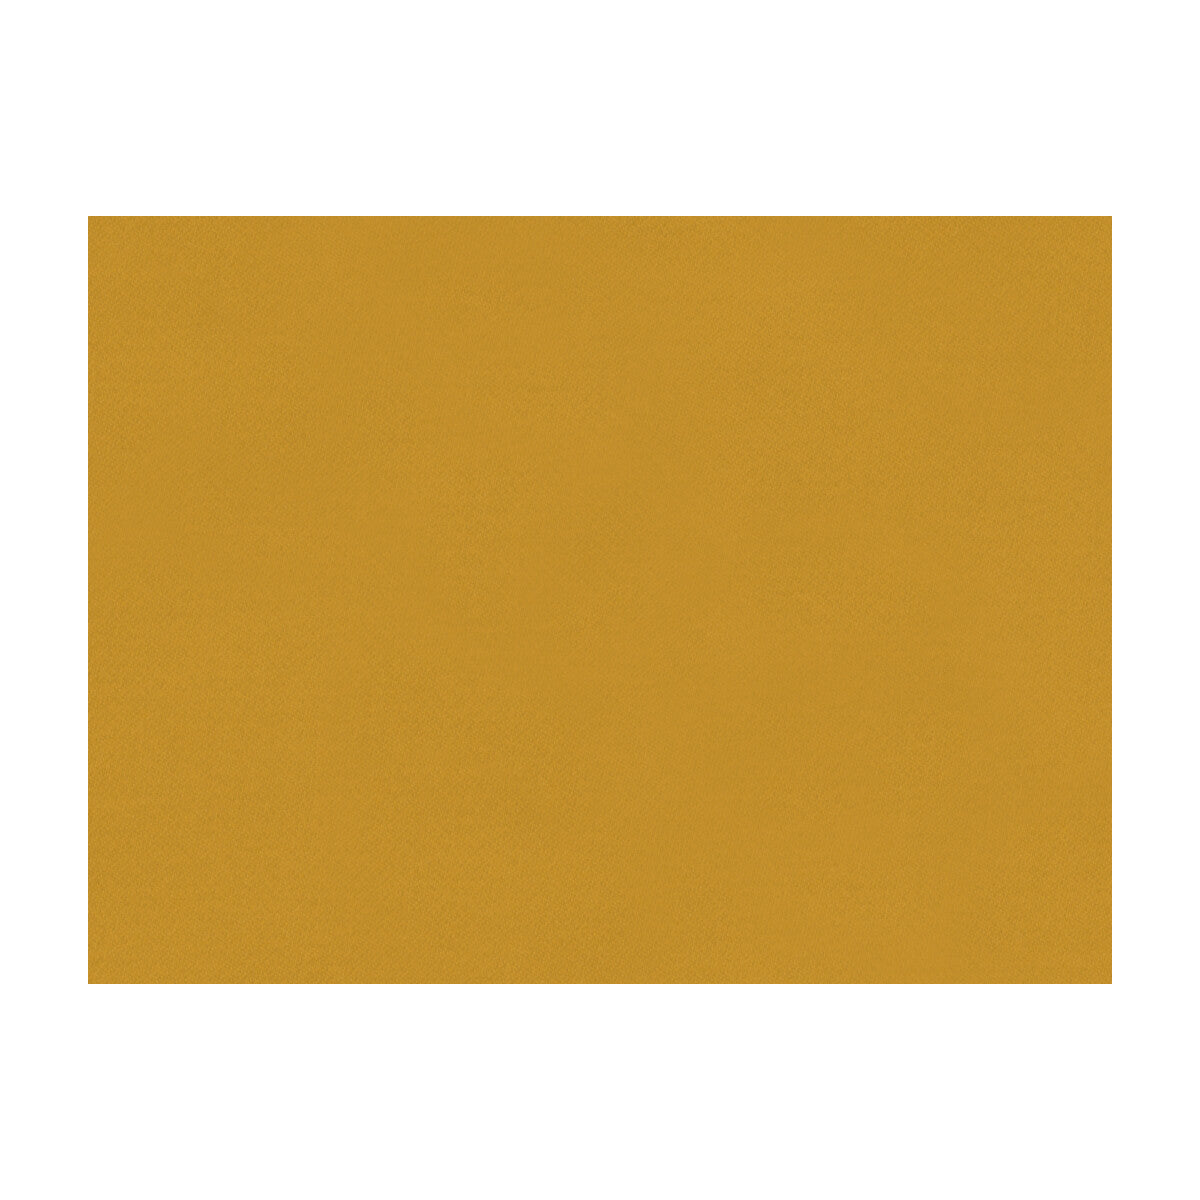 Montespan Satin fabric in gilt color - pattern 2010114.414.0 - by Lee Jofa in the Oscar De La Renta II collection